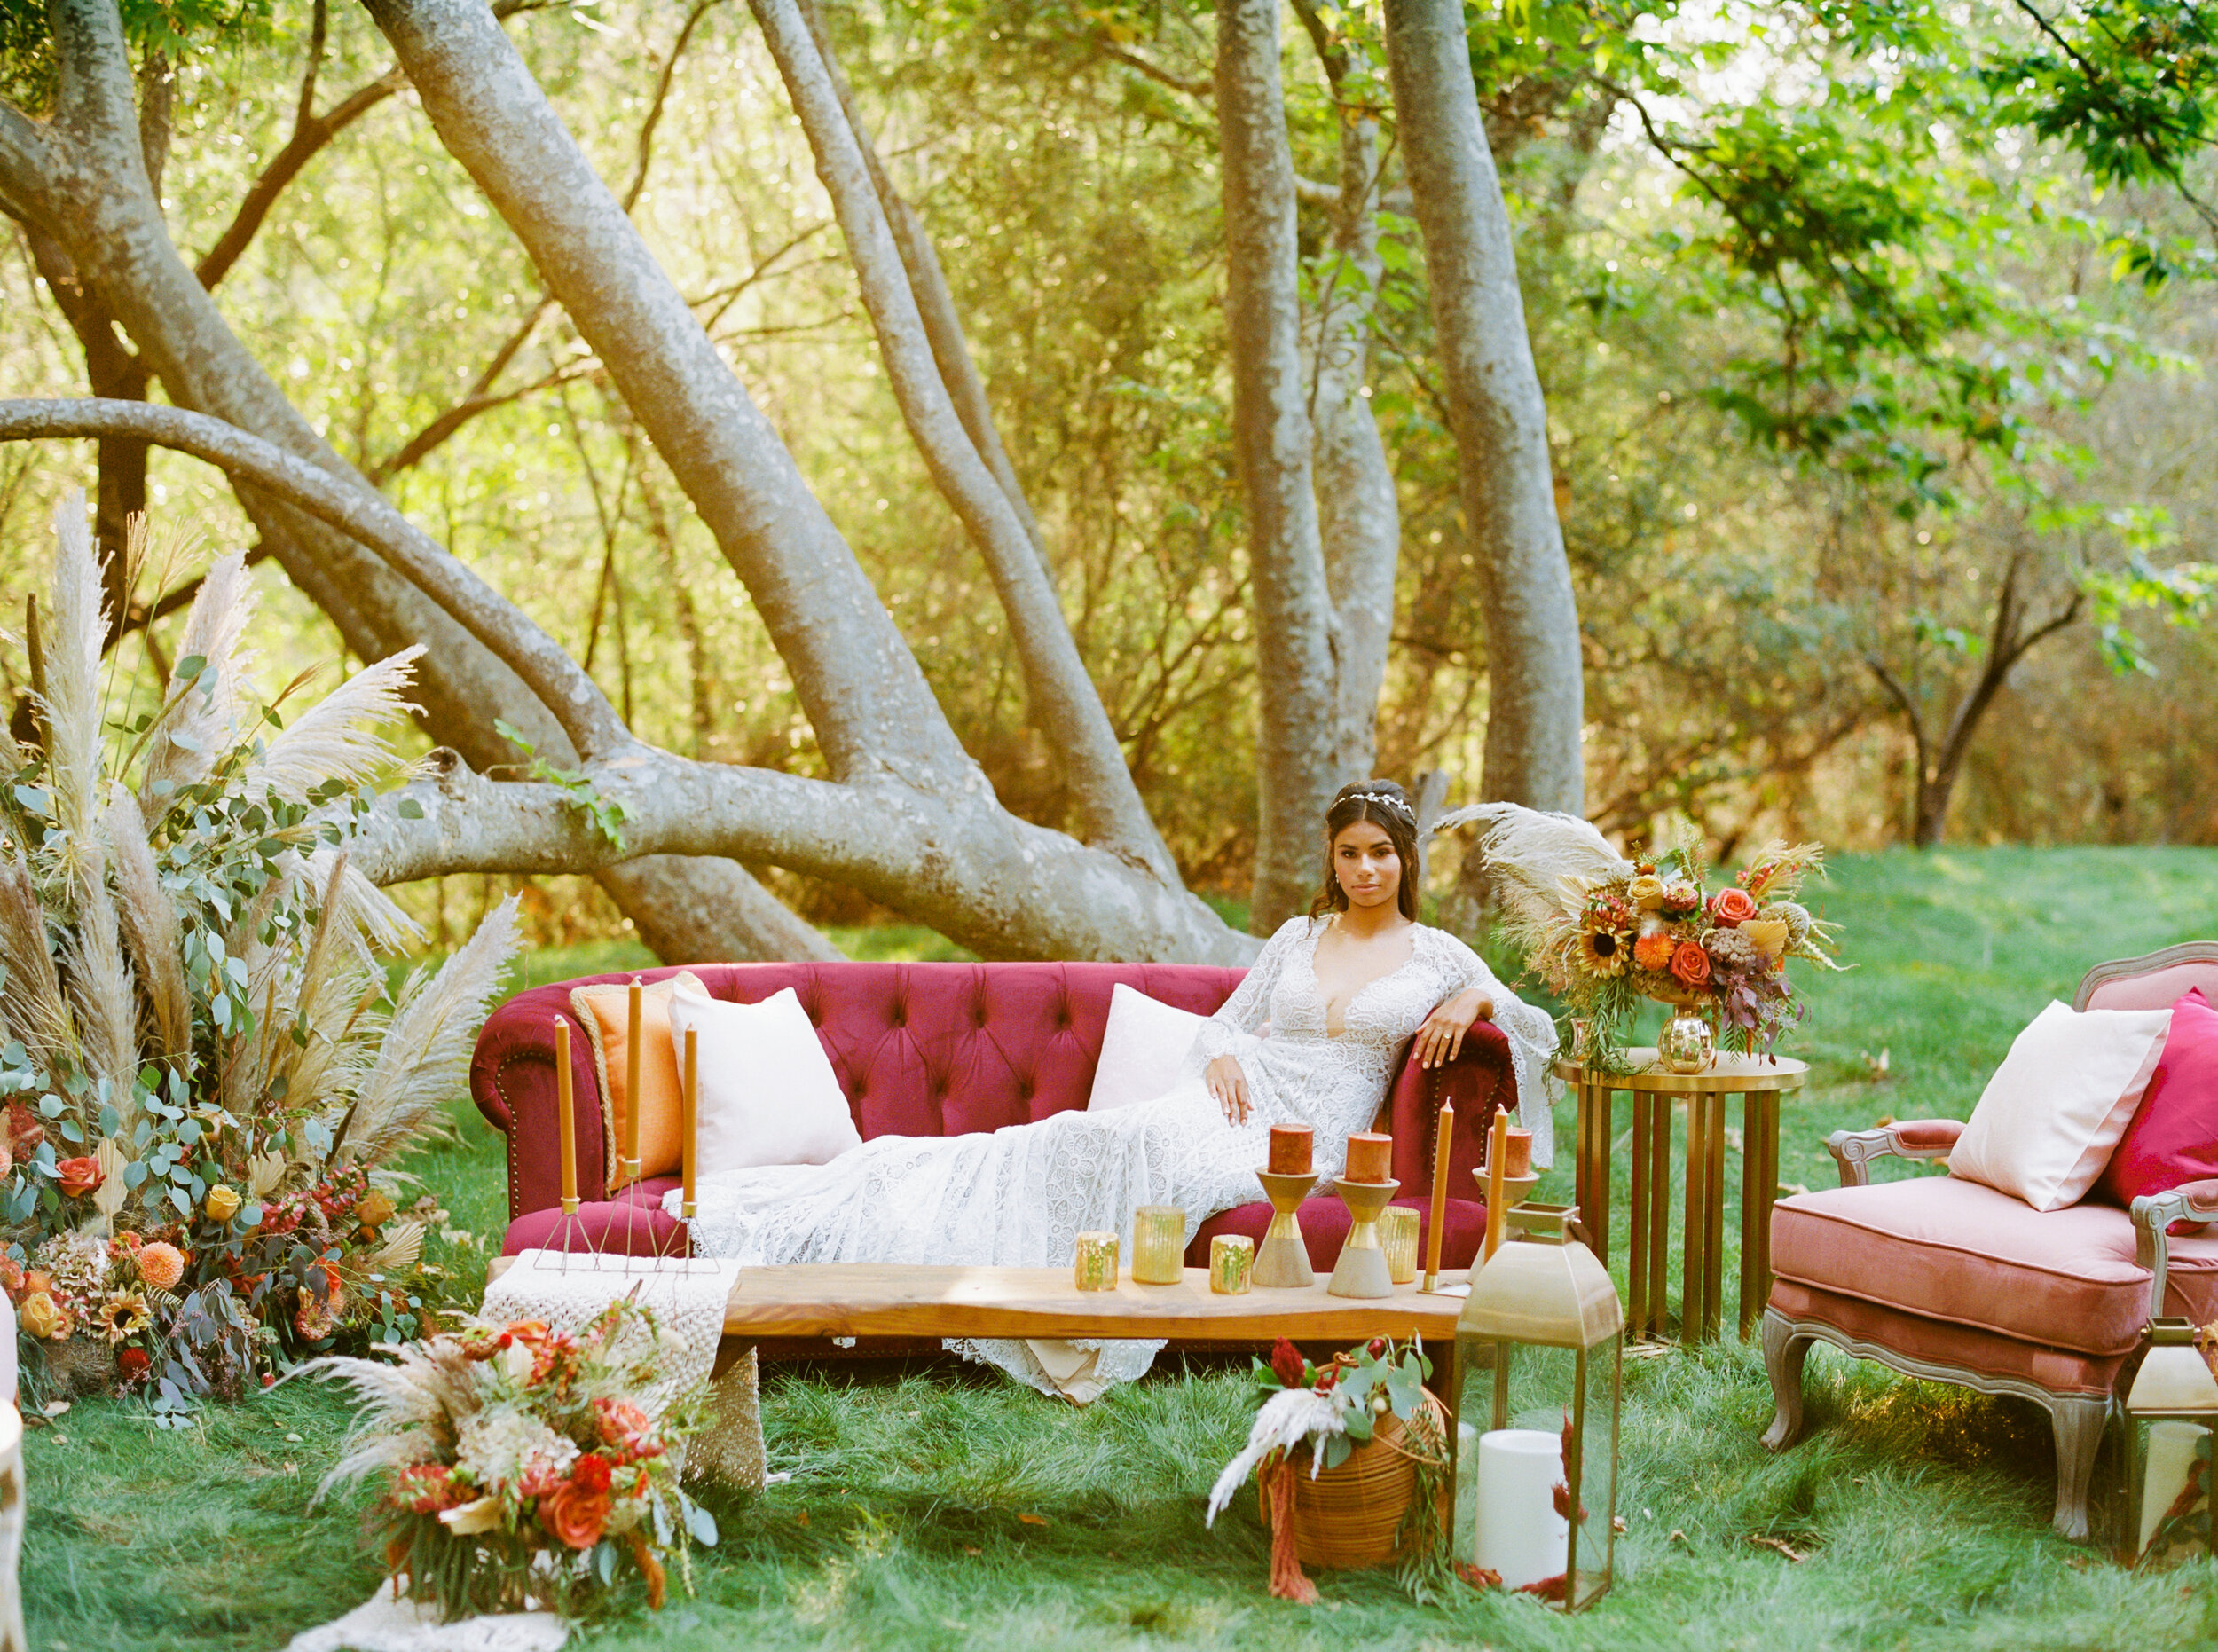 Sarahi Hadden - An Earthy Summer Boho Inspired Wedding with Sunset Hues at Gardener Ranch-15.jpg